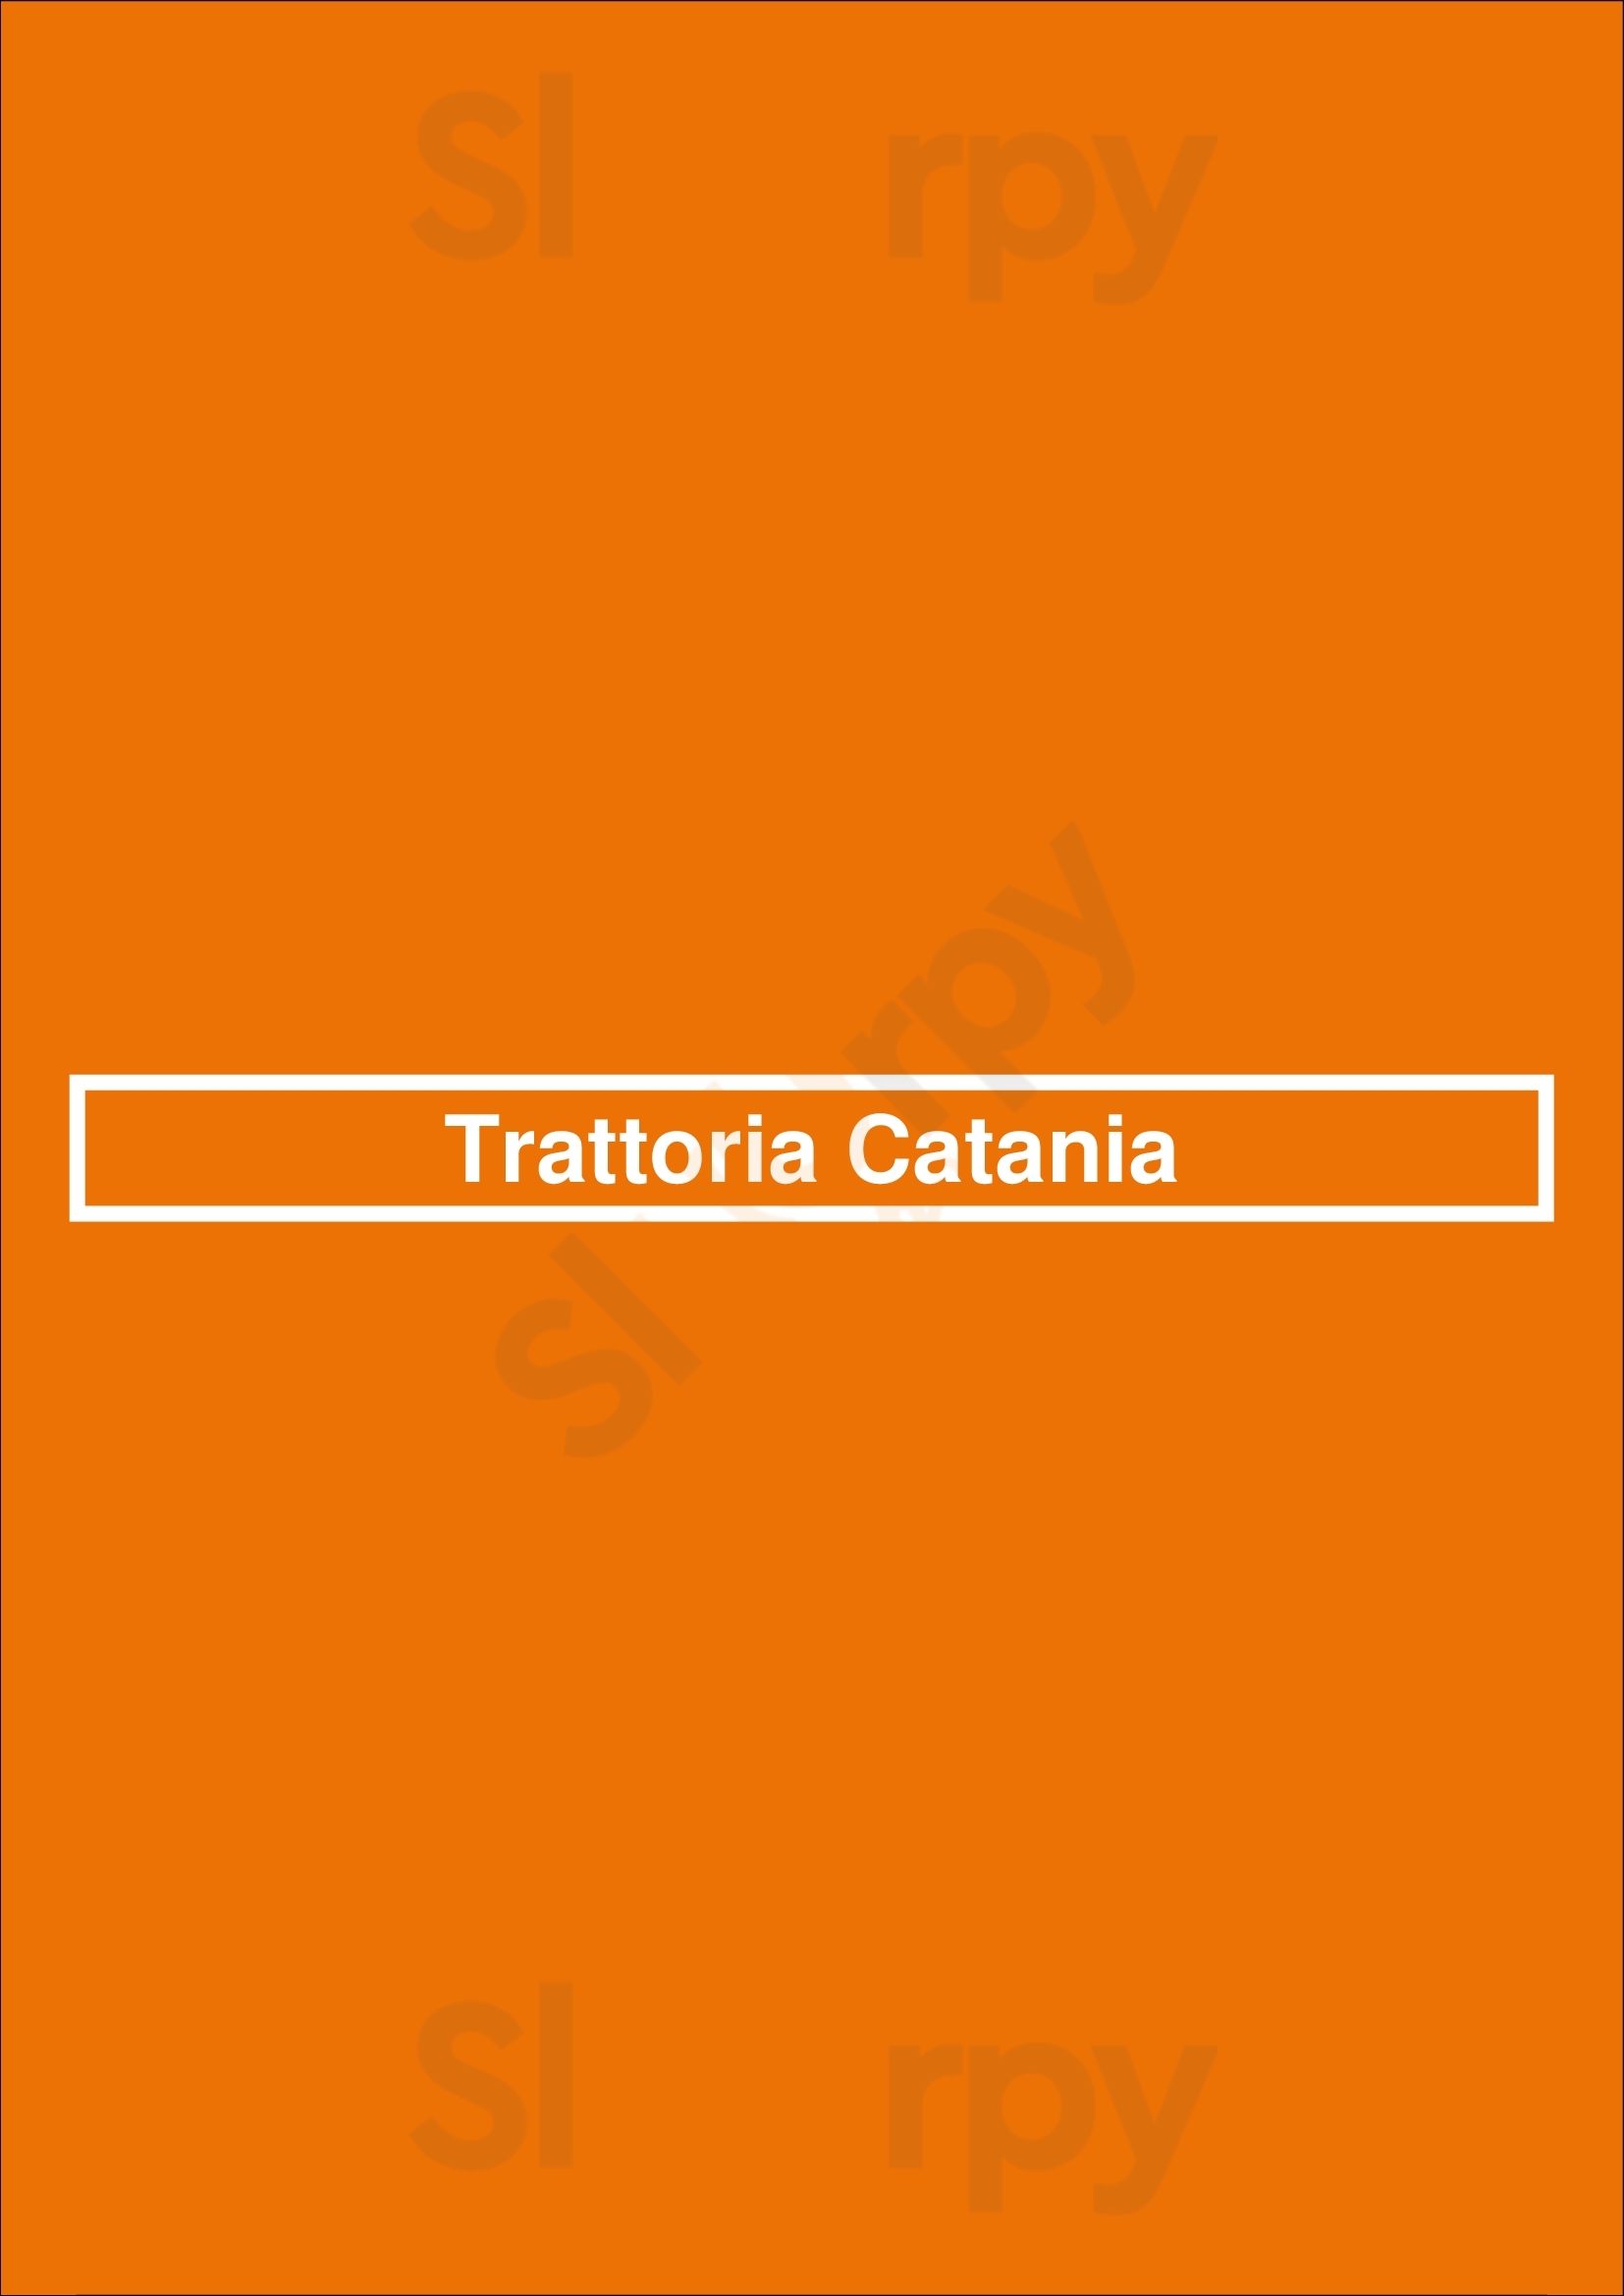 Trattoria Catania Limburg Menu - 1